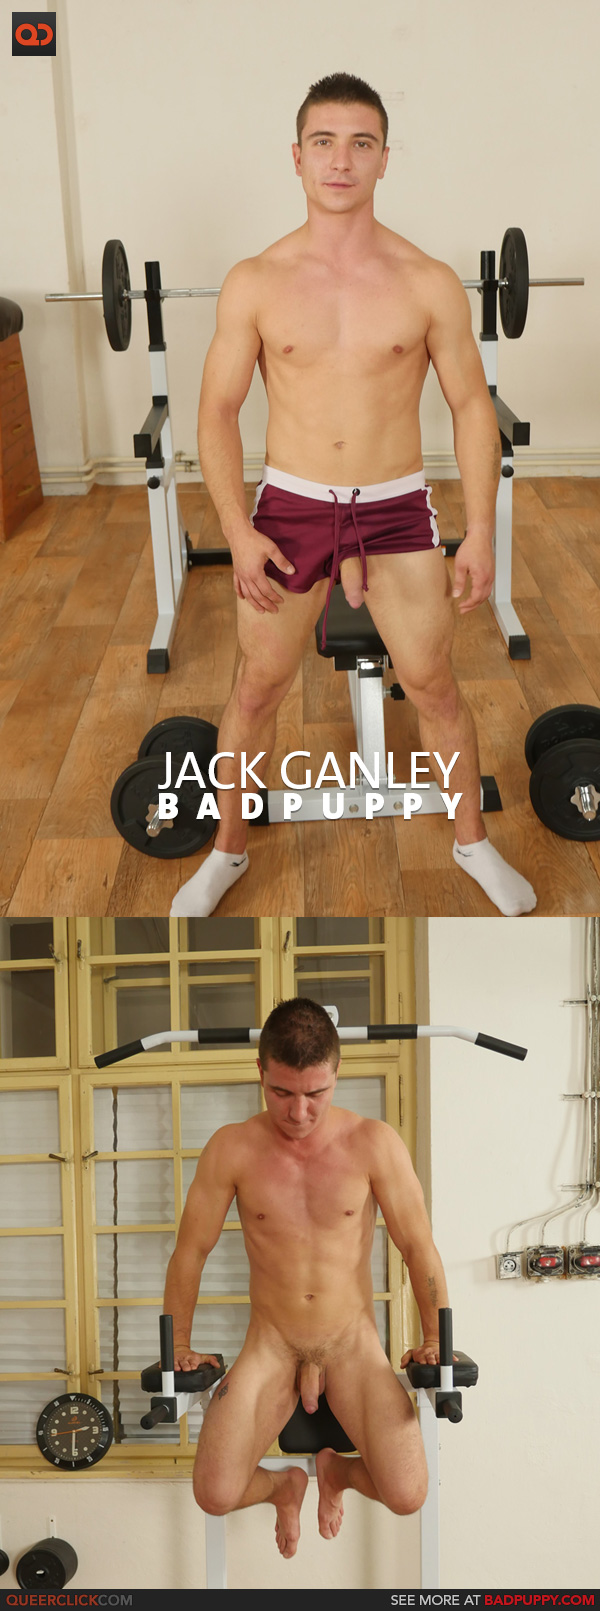 BadPuppy: Jack Ganley